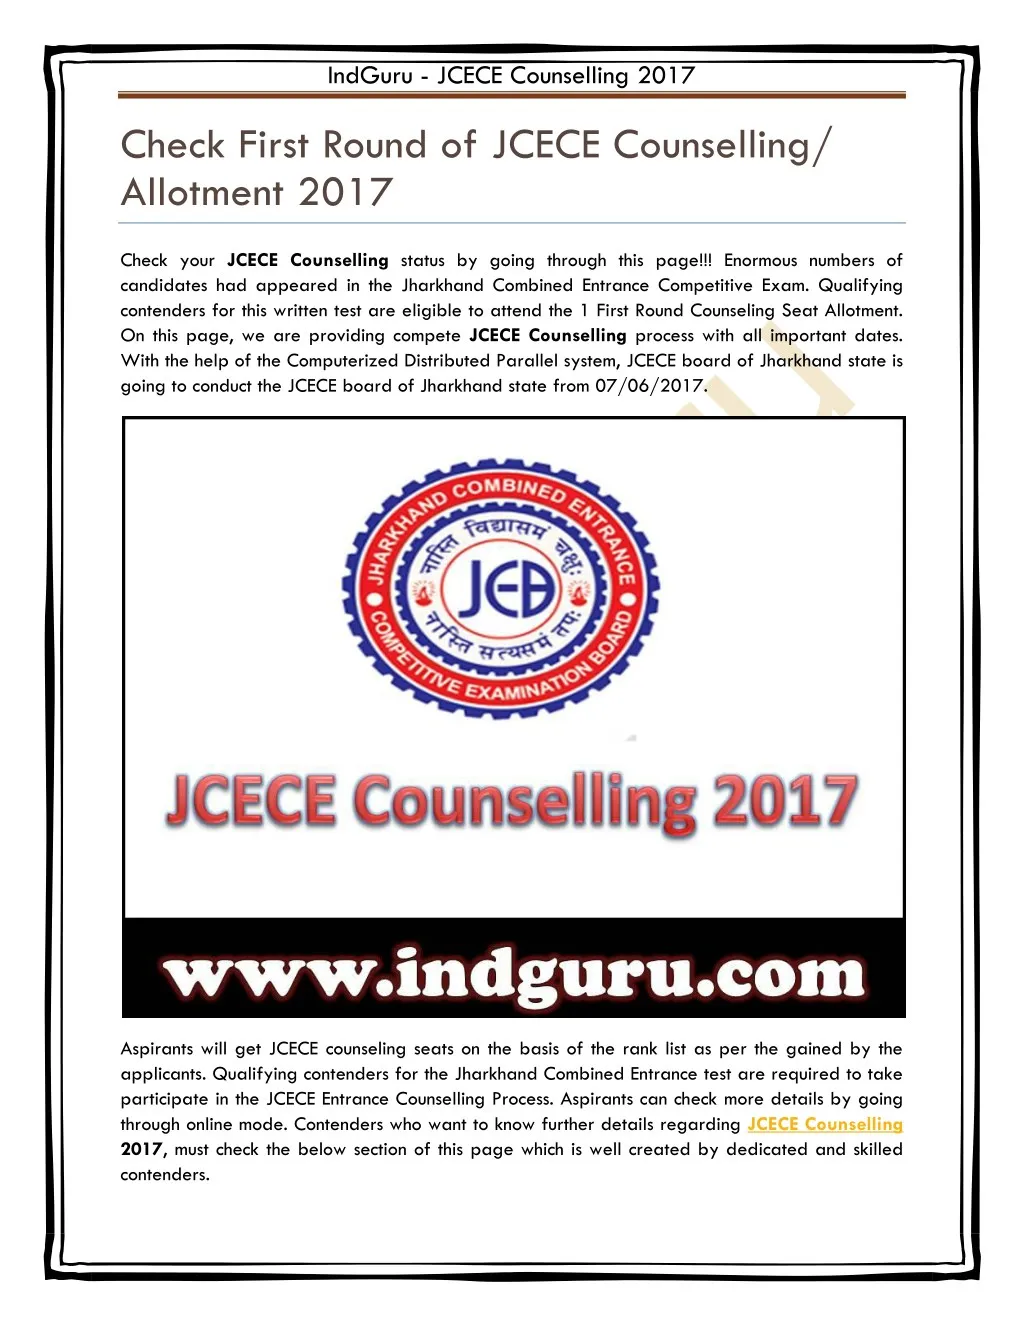 indguru jcece counselling 2017